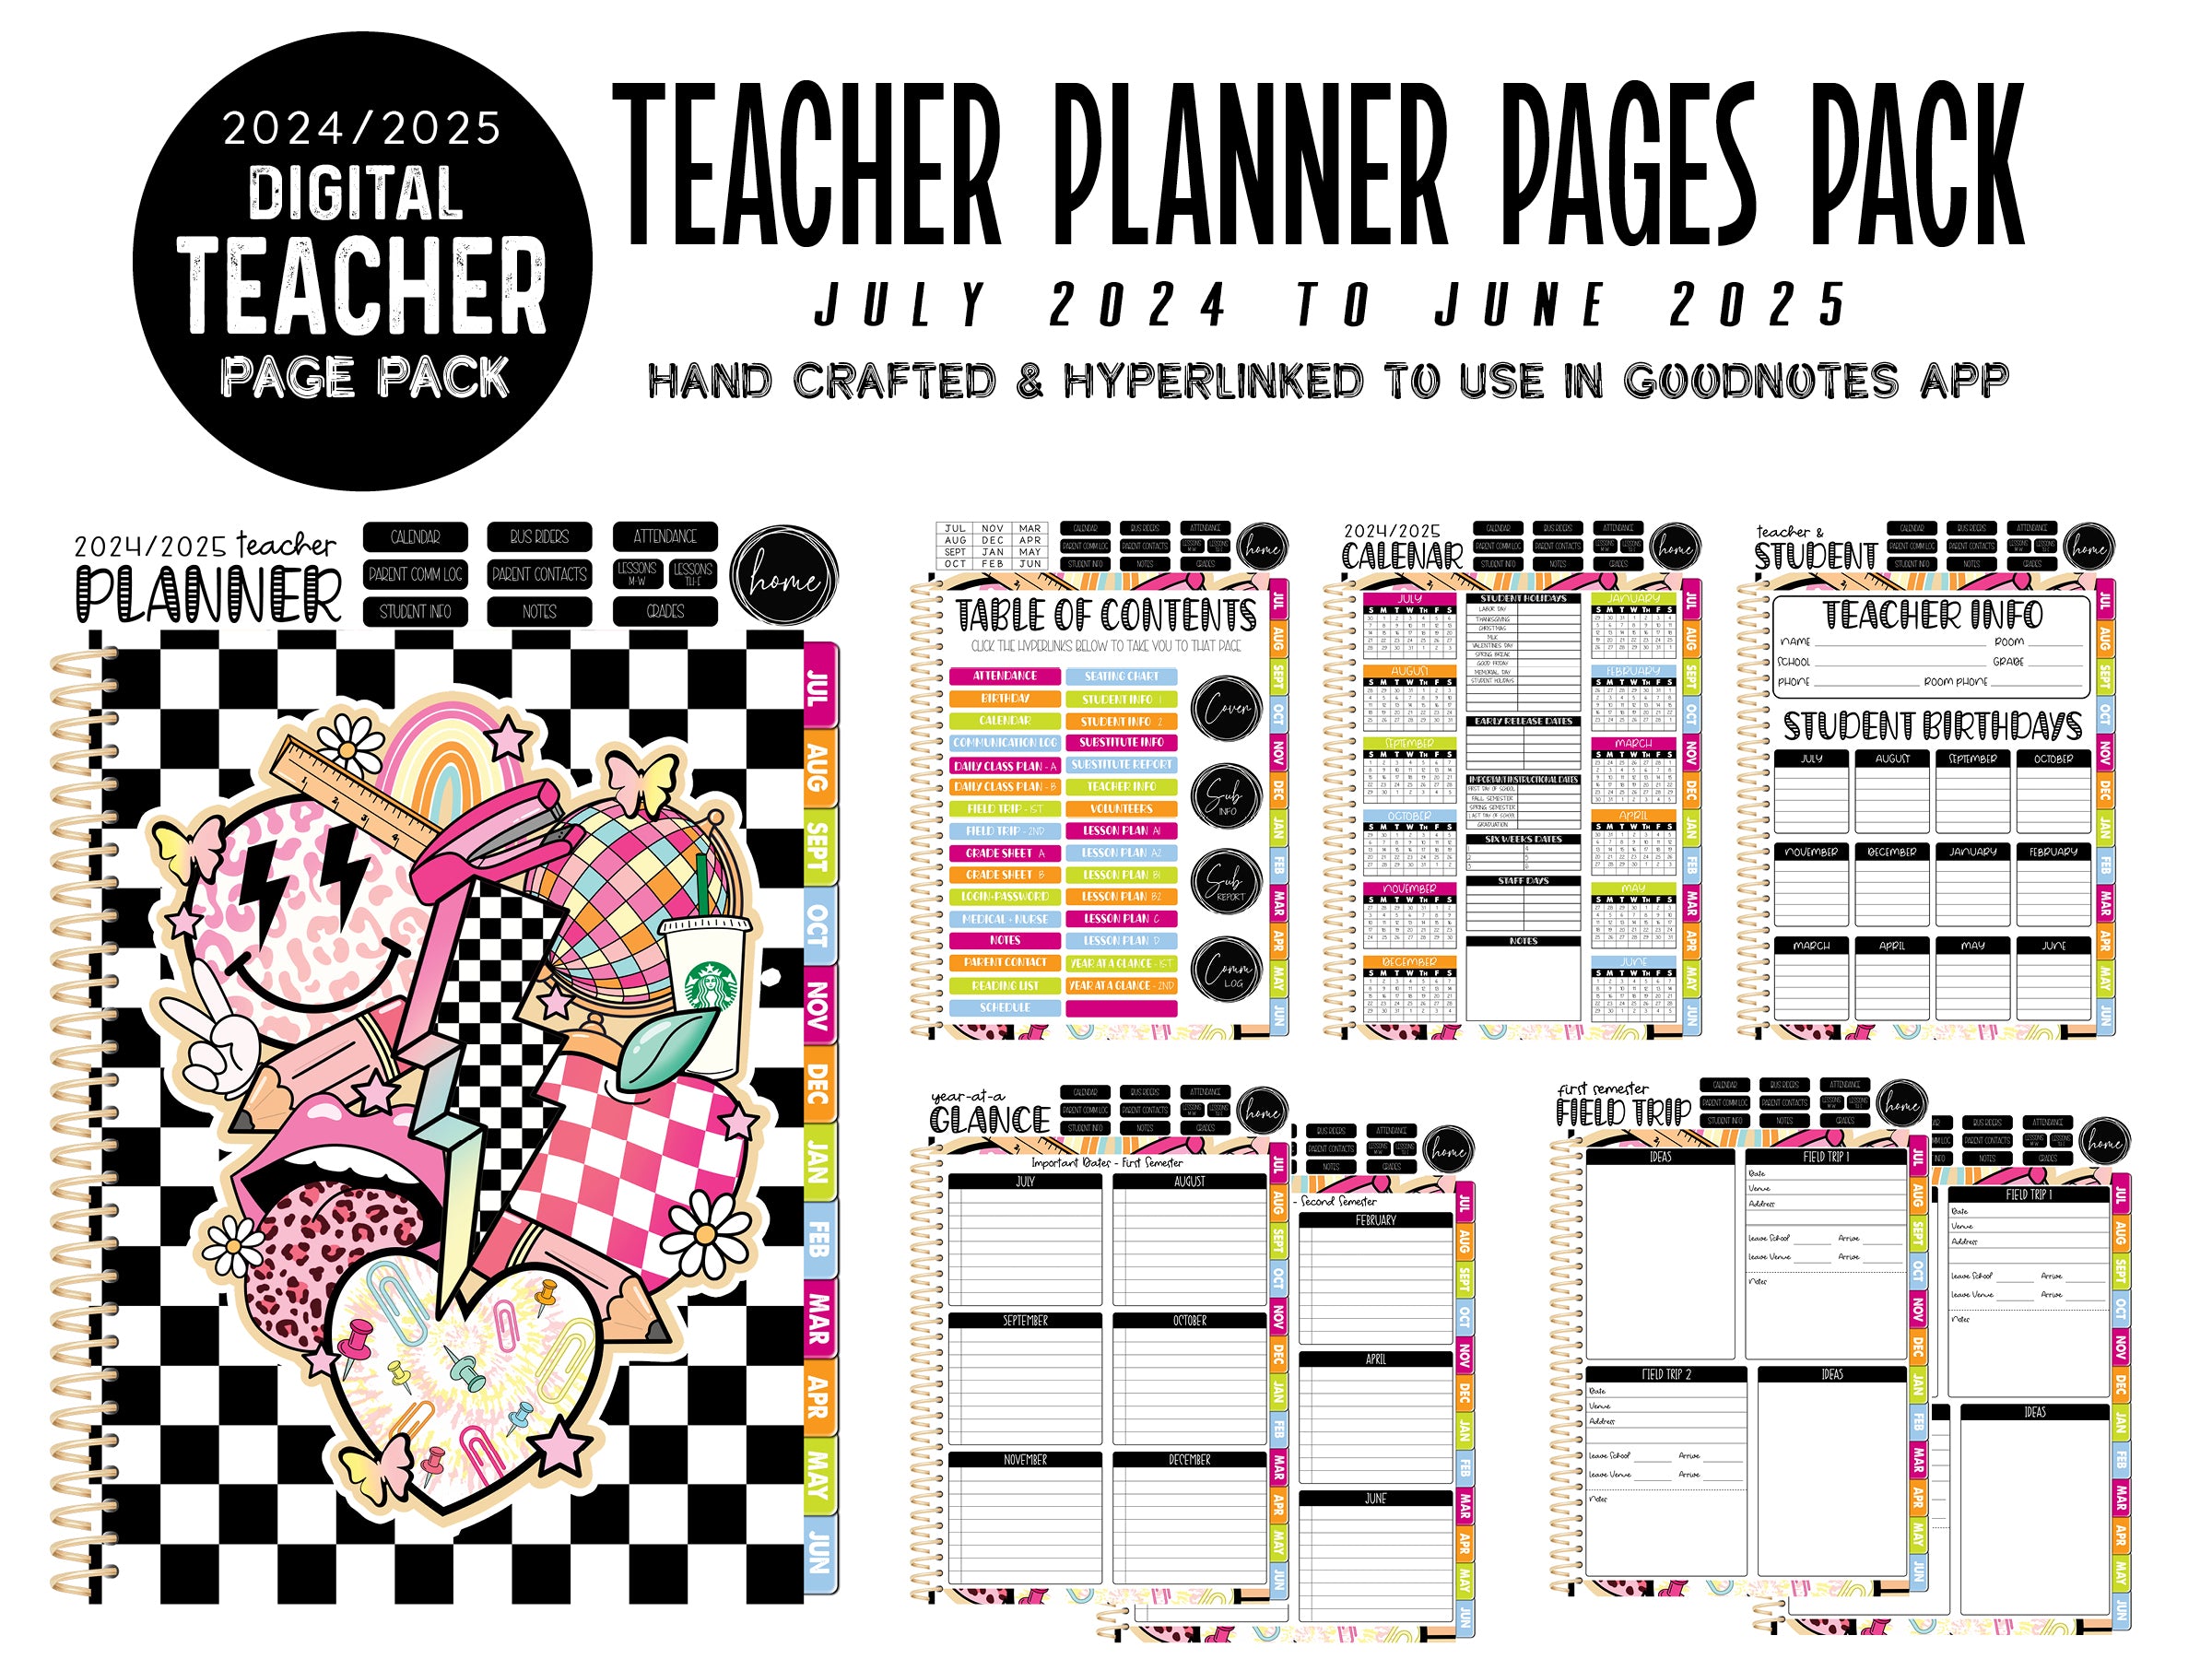 2024 2025 Digital Teacher Page Pack | AZ RETRO TEACHER